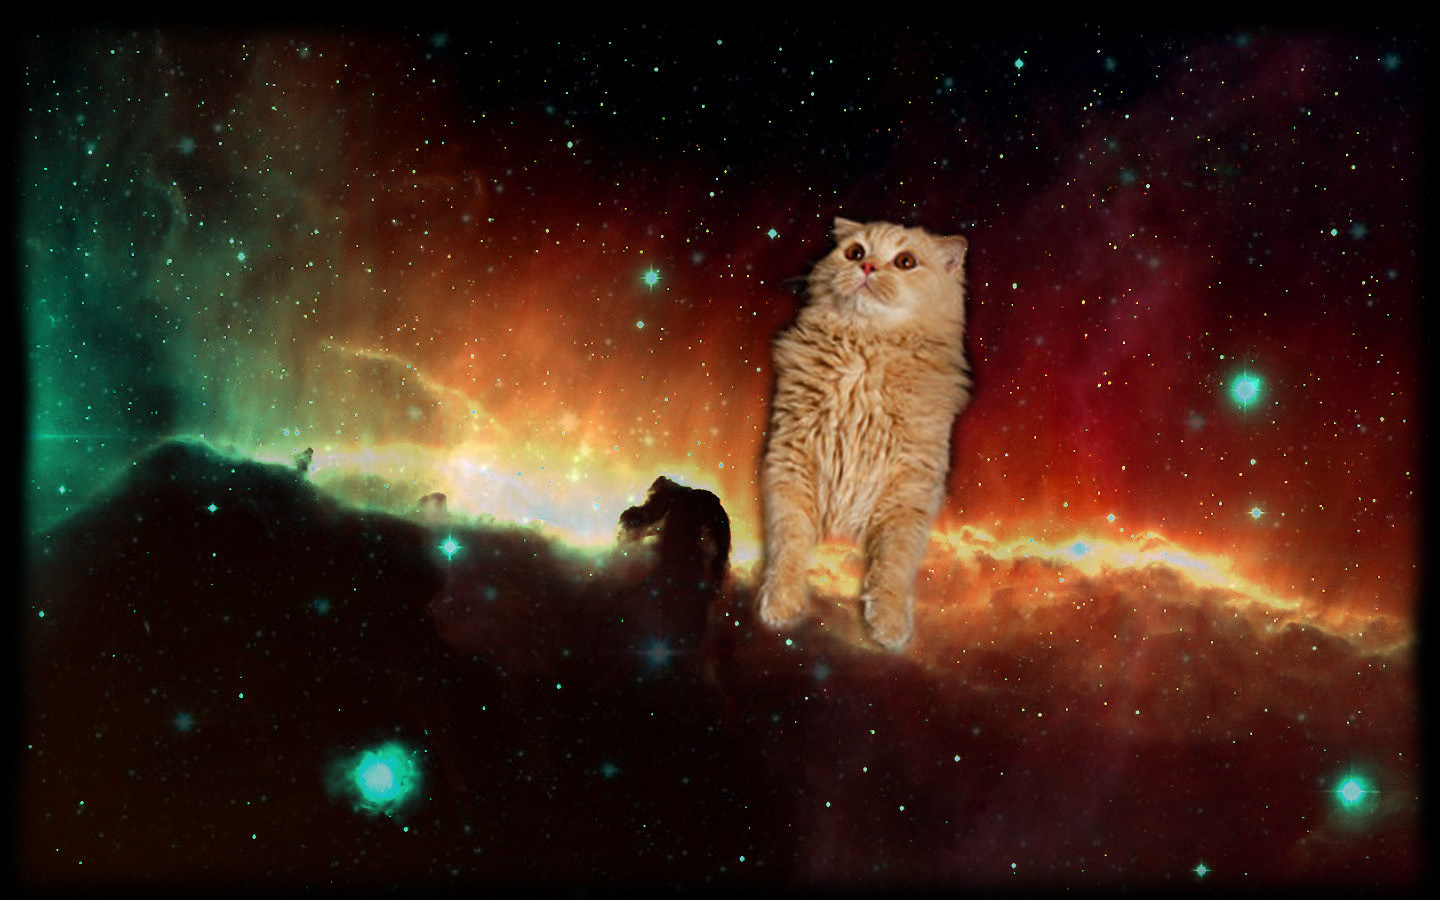 Space Cat - 1440x900 Wallpaper - teahub.io